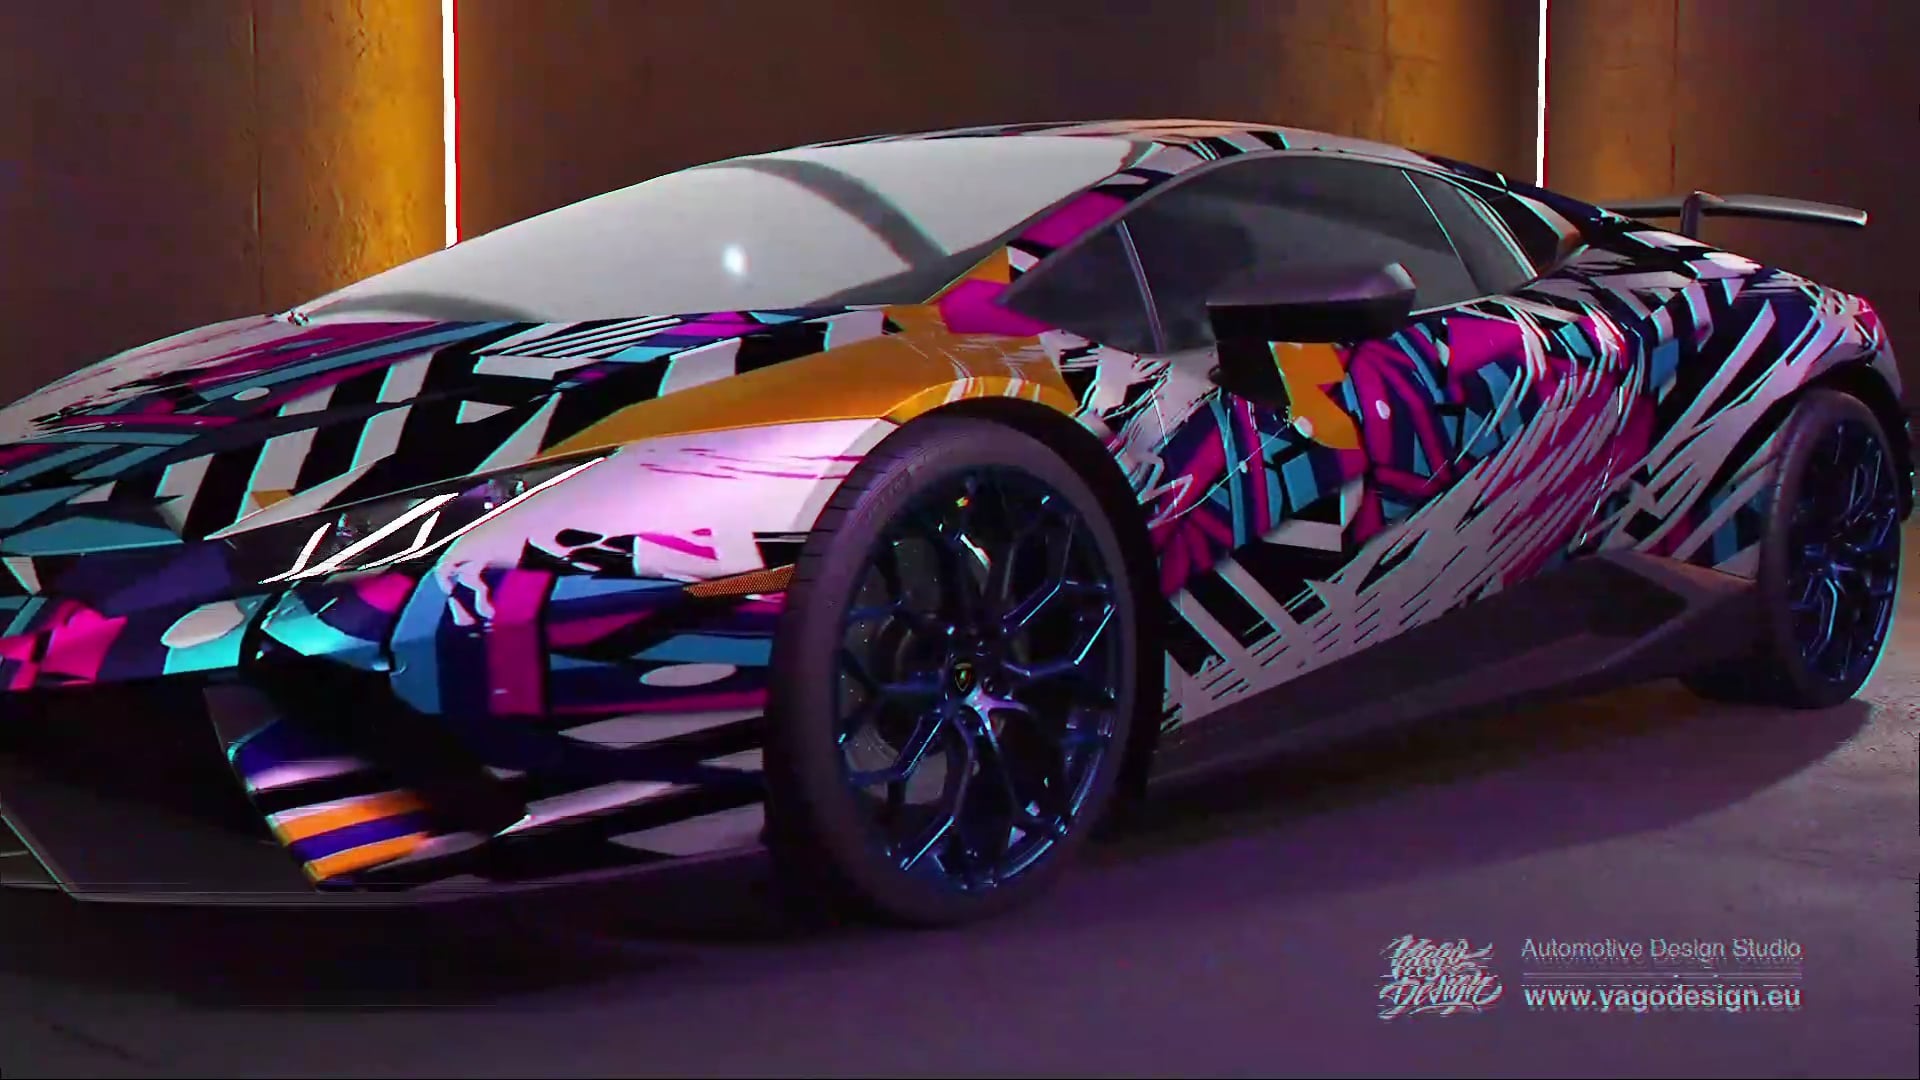 Lamborghini Design by Yagodesign eu on Vimeo